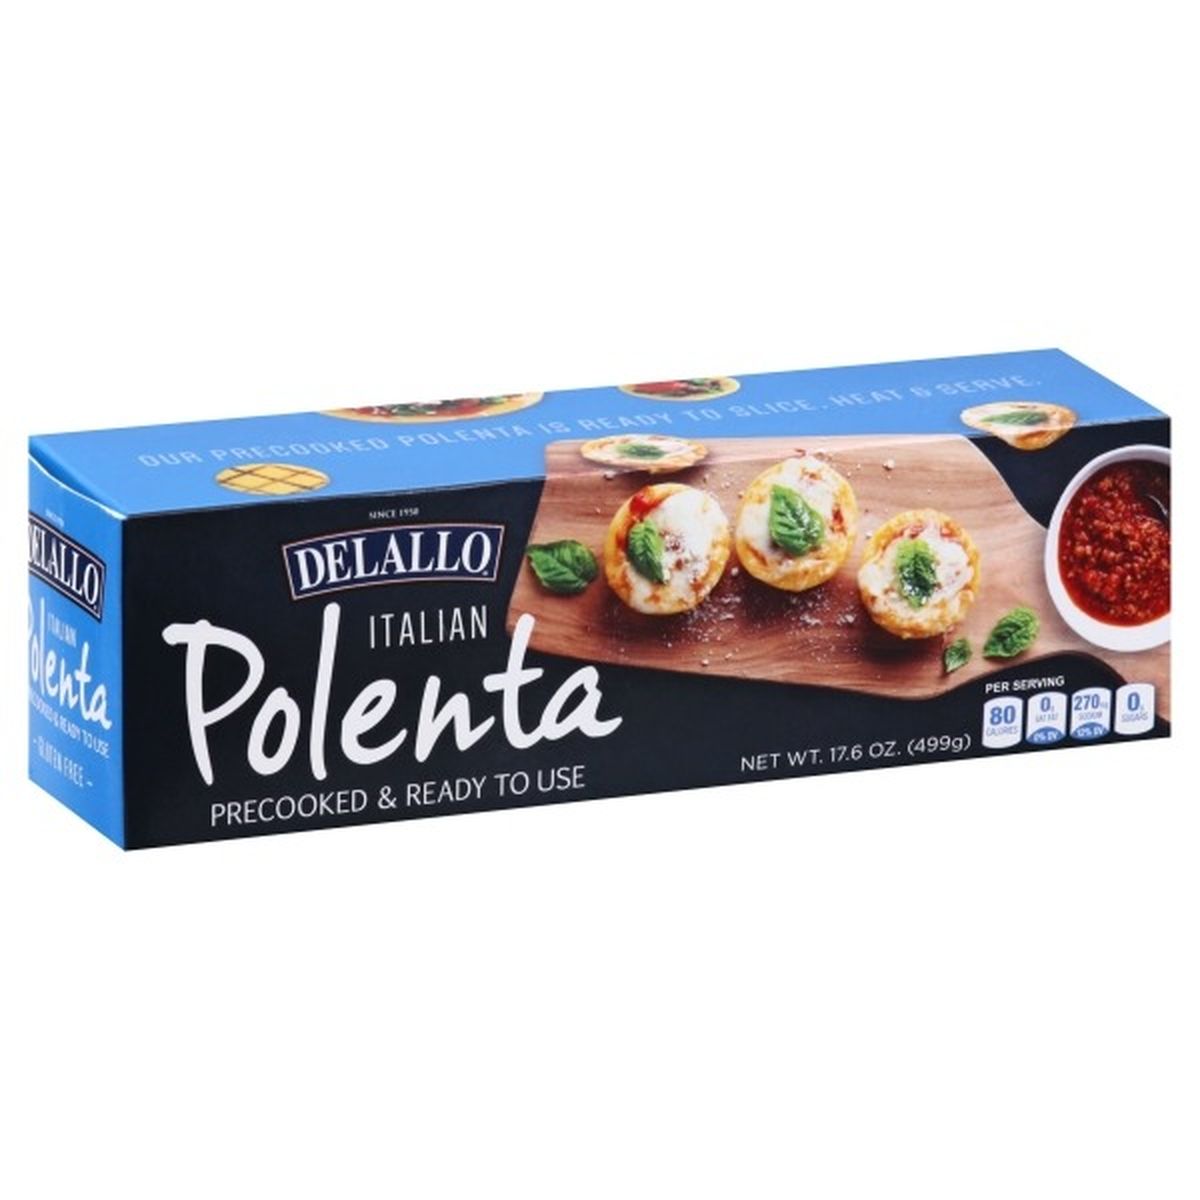 Calories in DeLallo Polenta, Italian